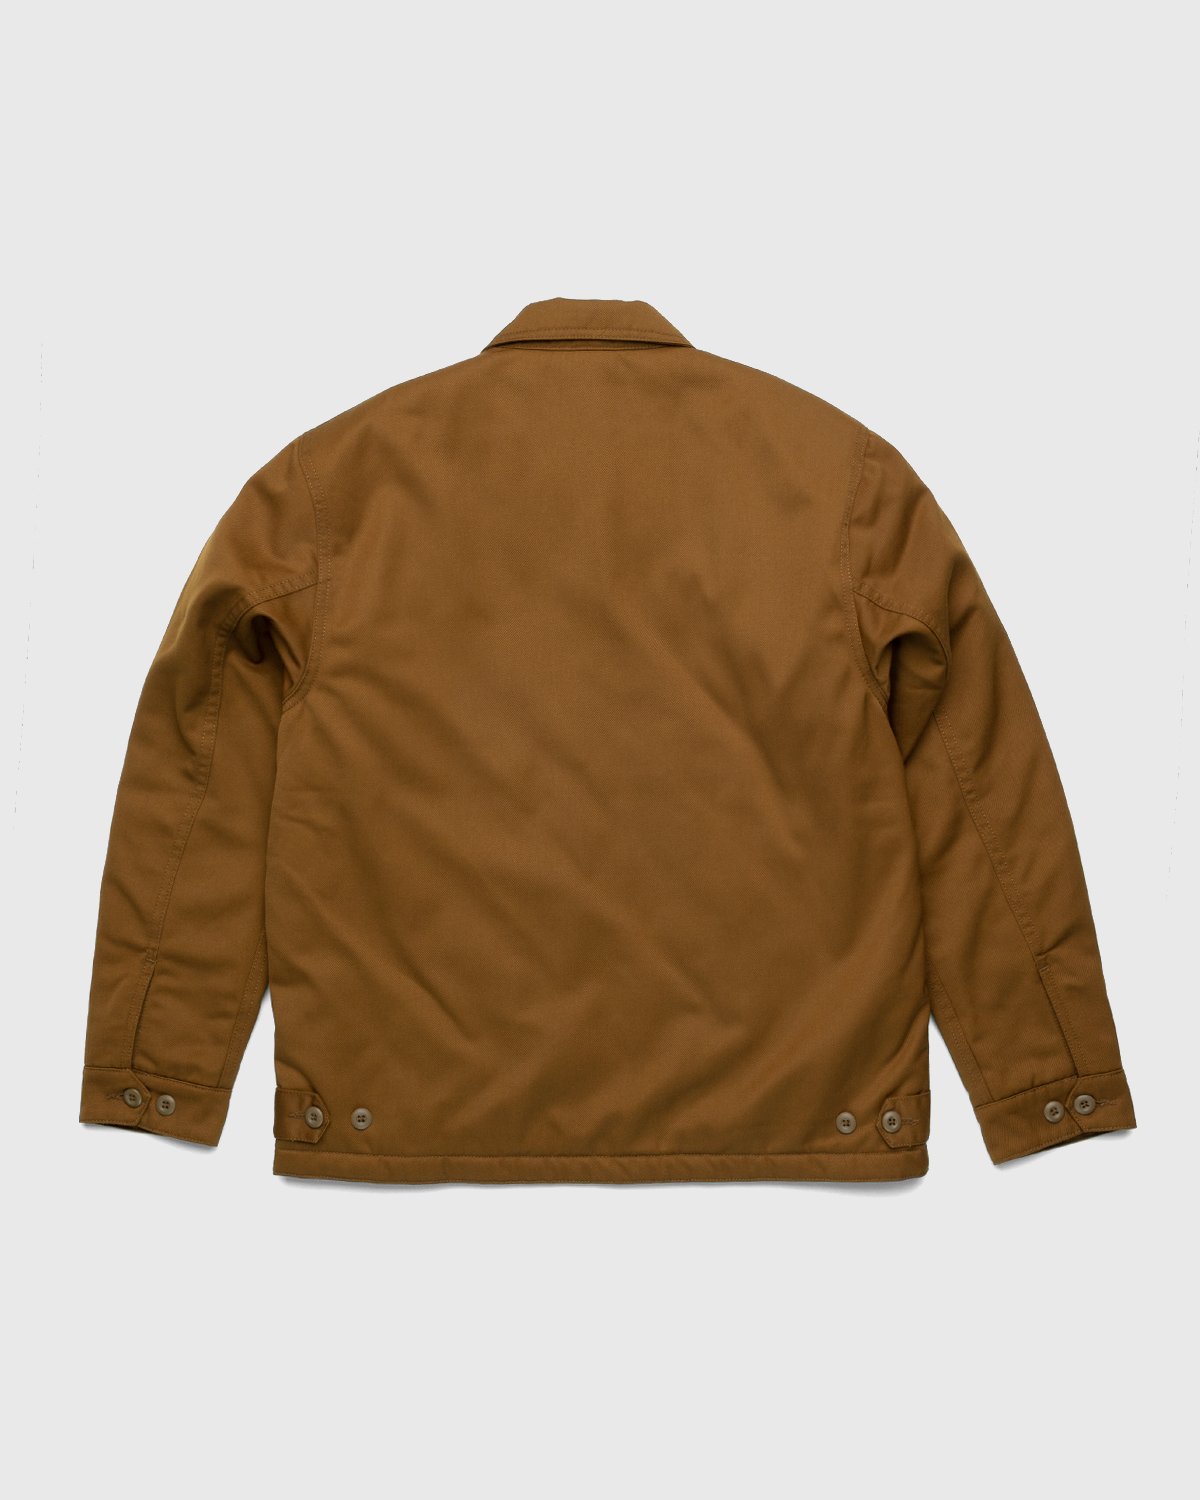 Carhartt WIP - Modular Jacket Tawny Rinsed - Clothing - Brown - Image 2